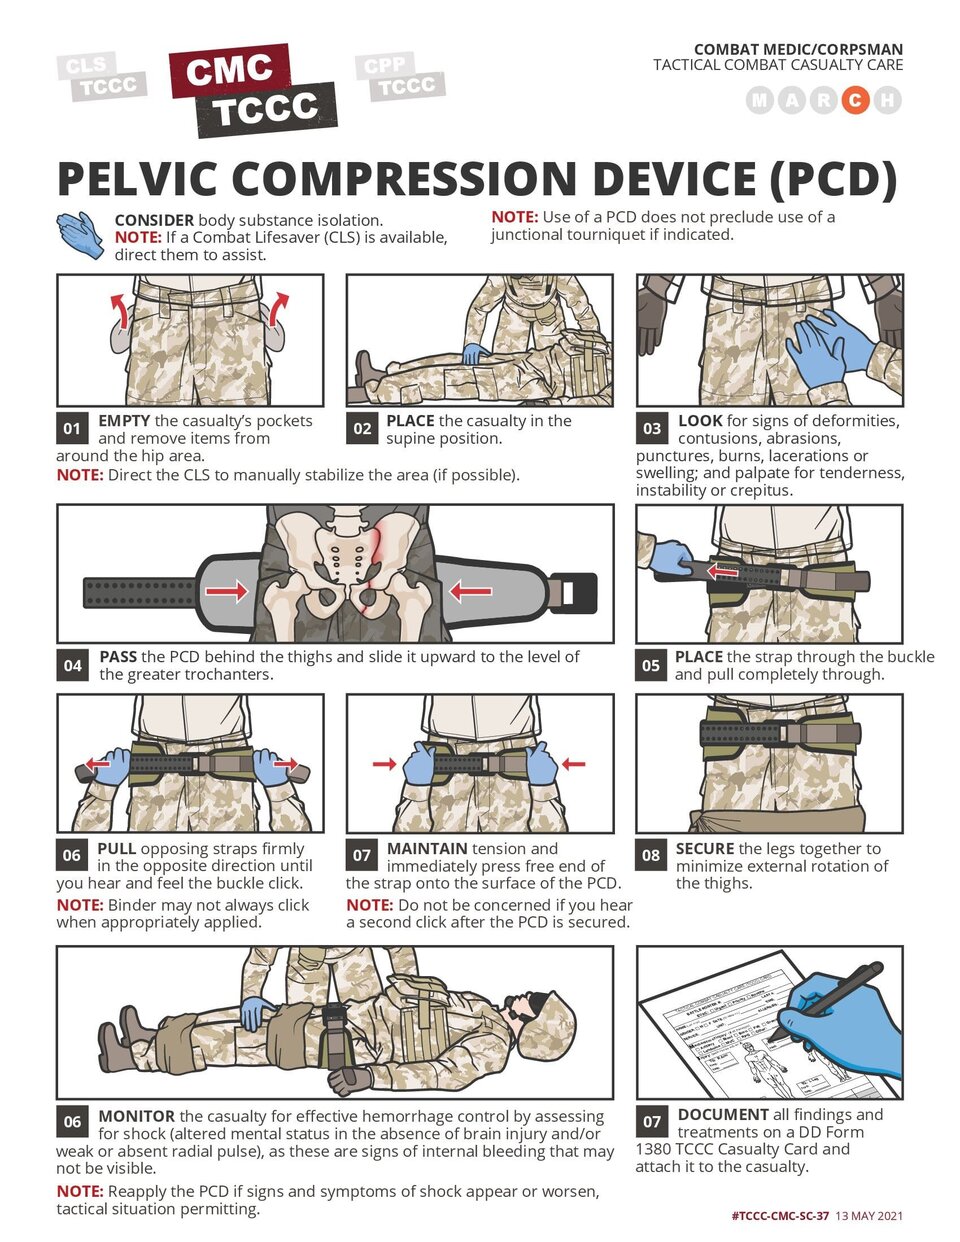 Pelvic Compression Device (PCD)